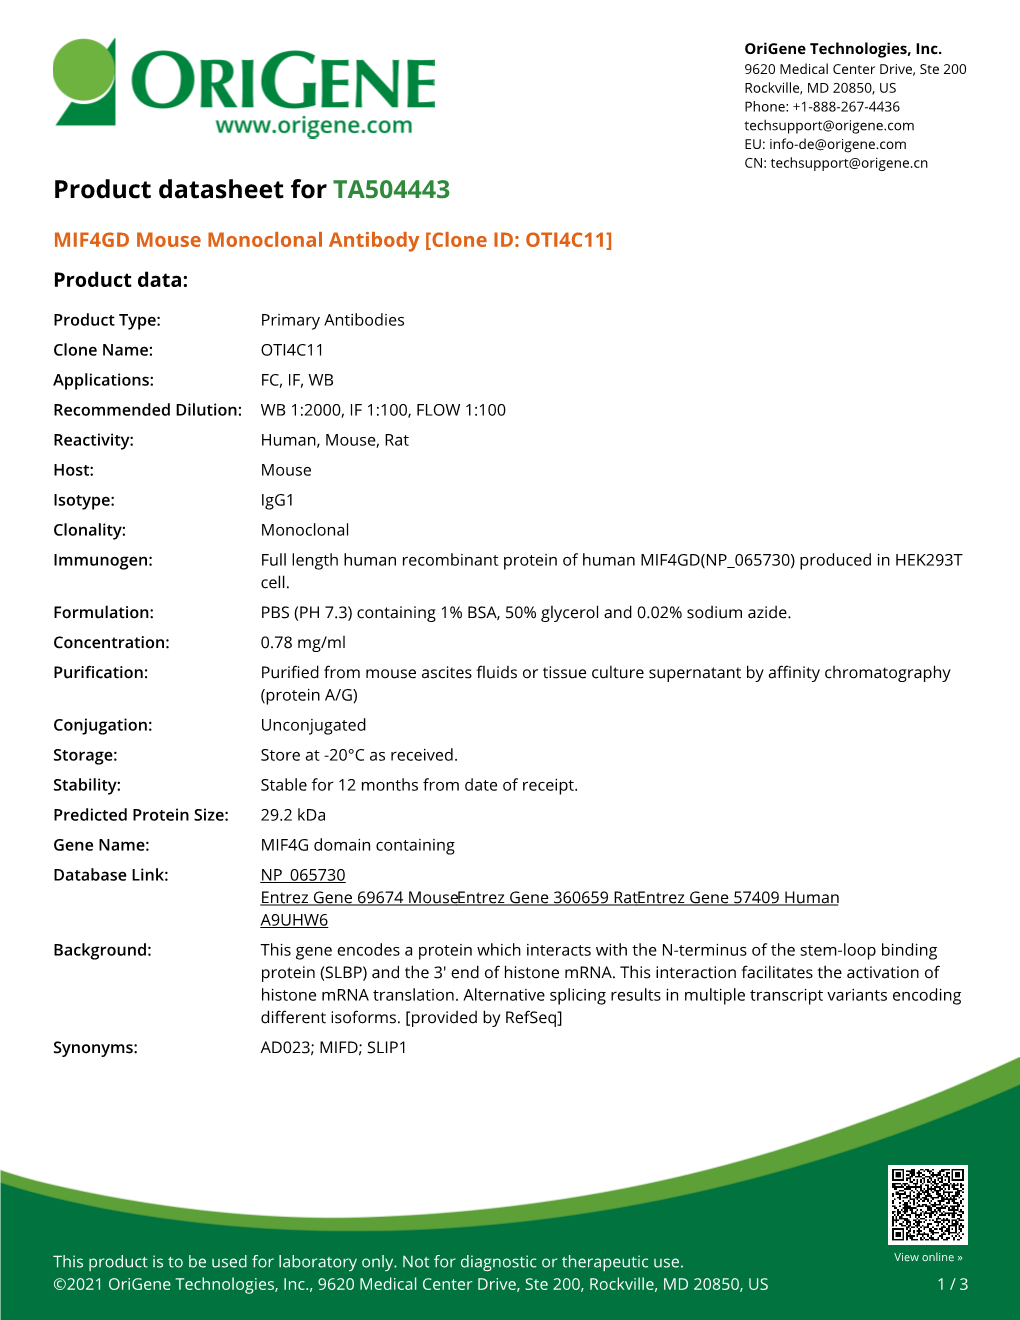 MIF4GD Mouse Monoclonal Antibody [Clone ID: OTI4C11] Product Data